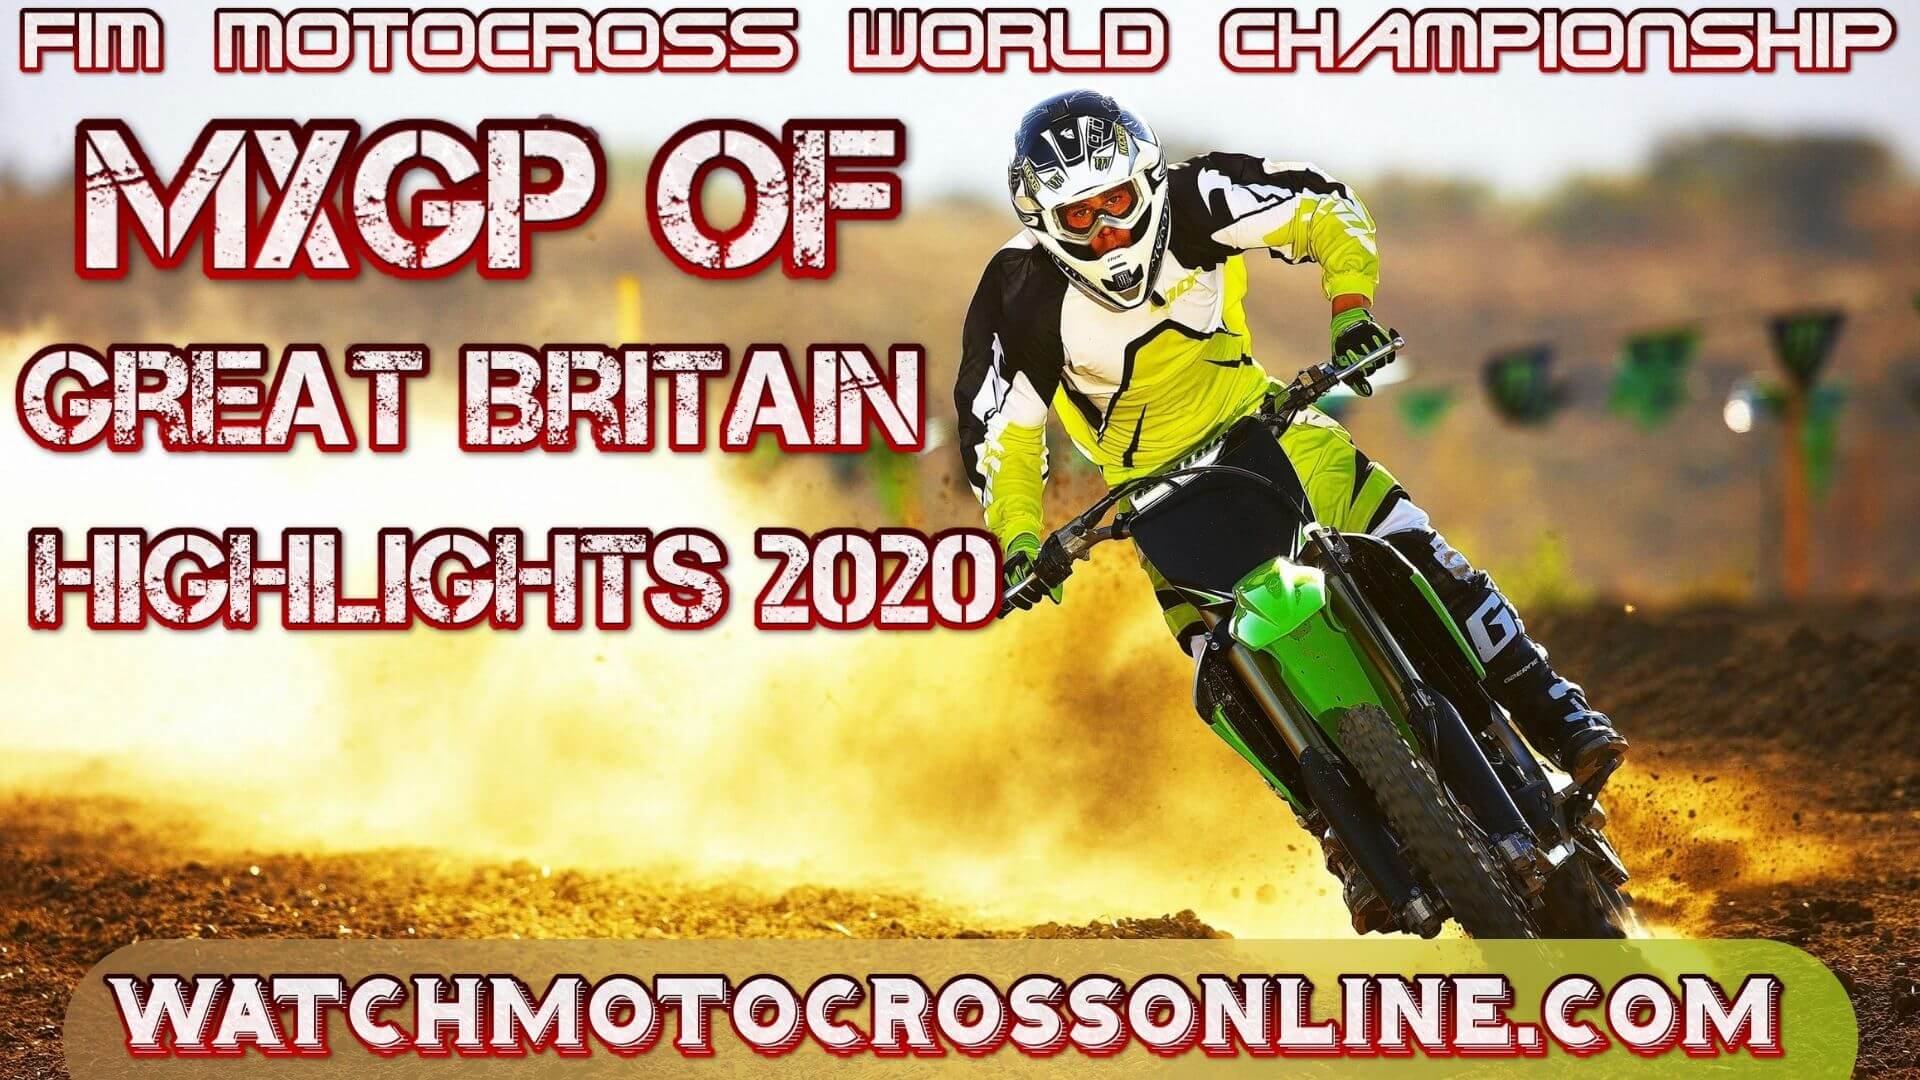 Great Britain MXGP Highlights 2020